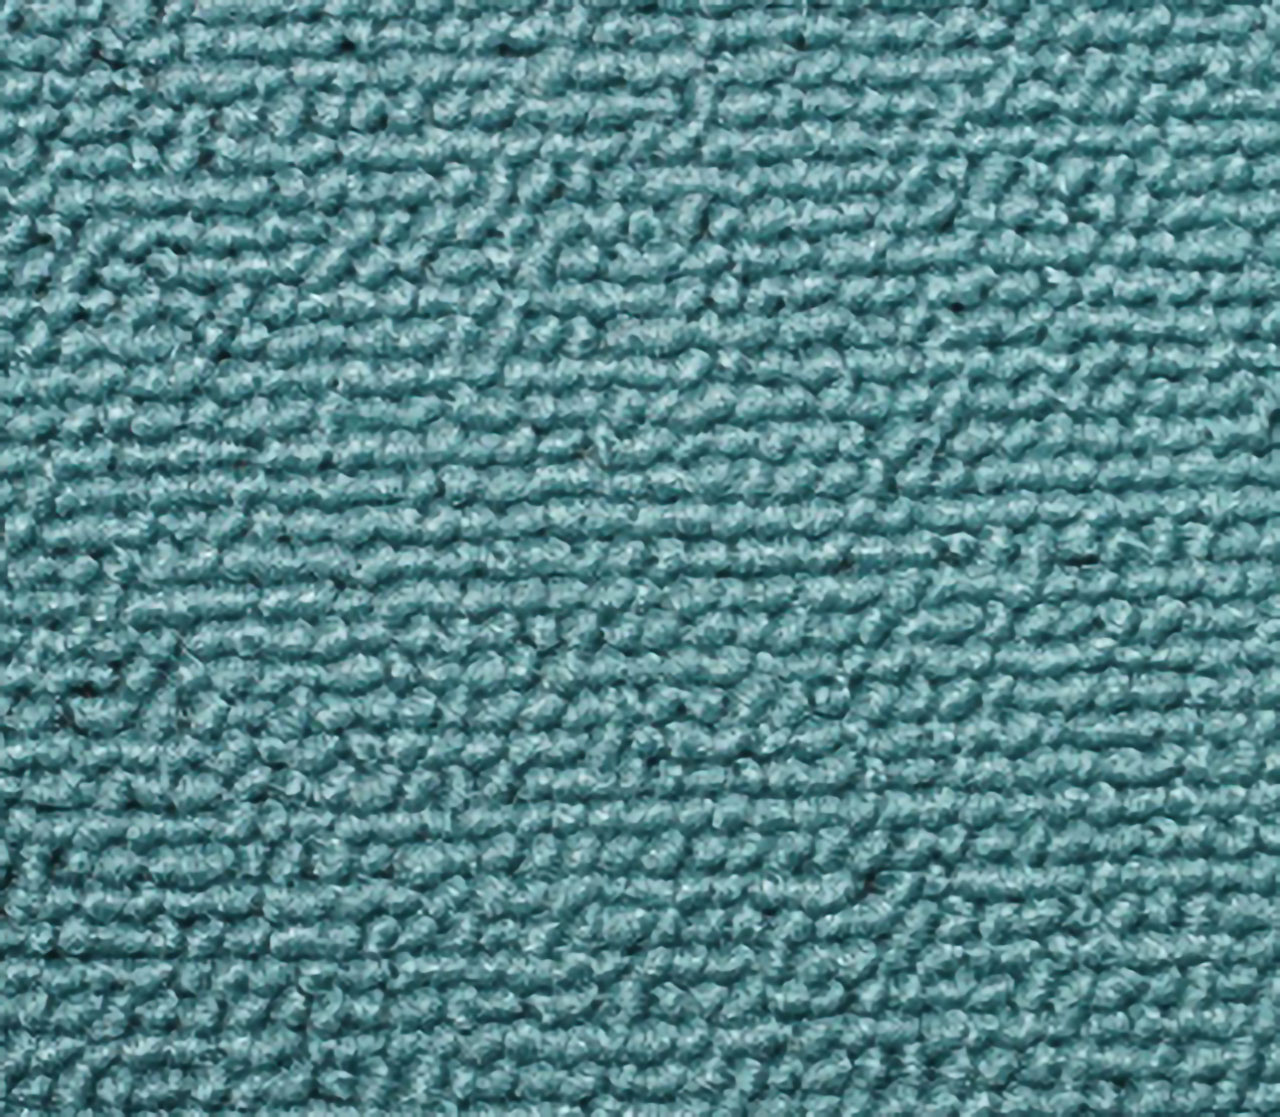 Holden Standard EJ Standard Panel Van B61 Geisha Turquoise Carpet (Image 1 of 1)